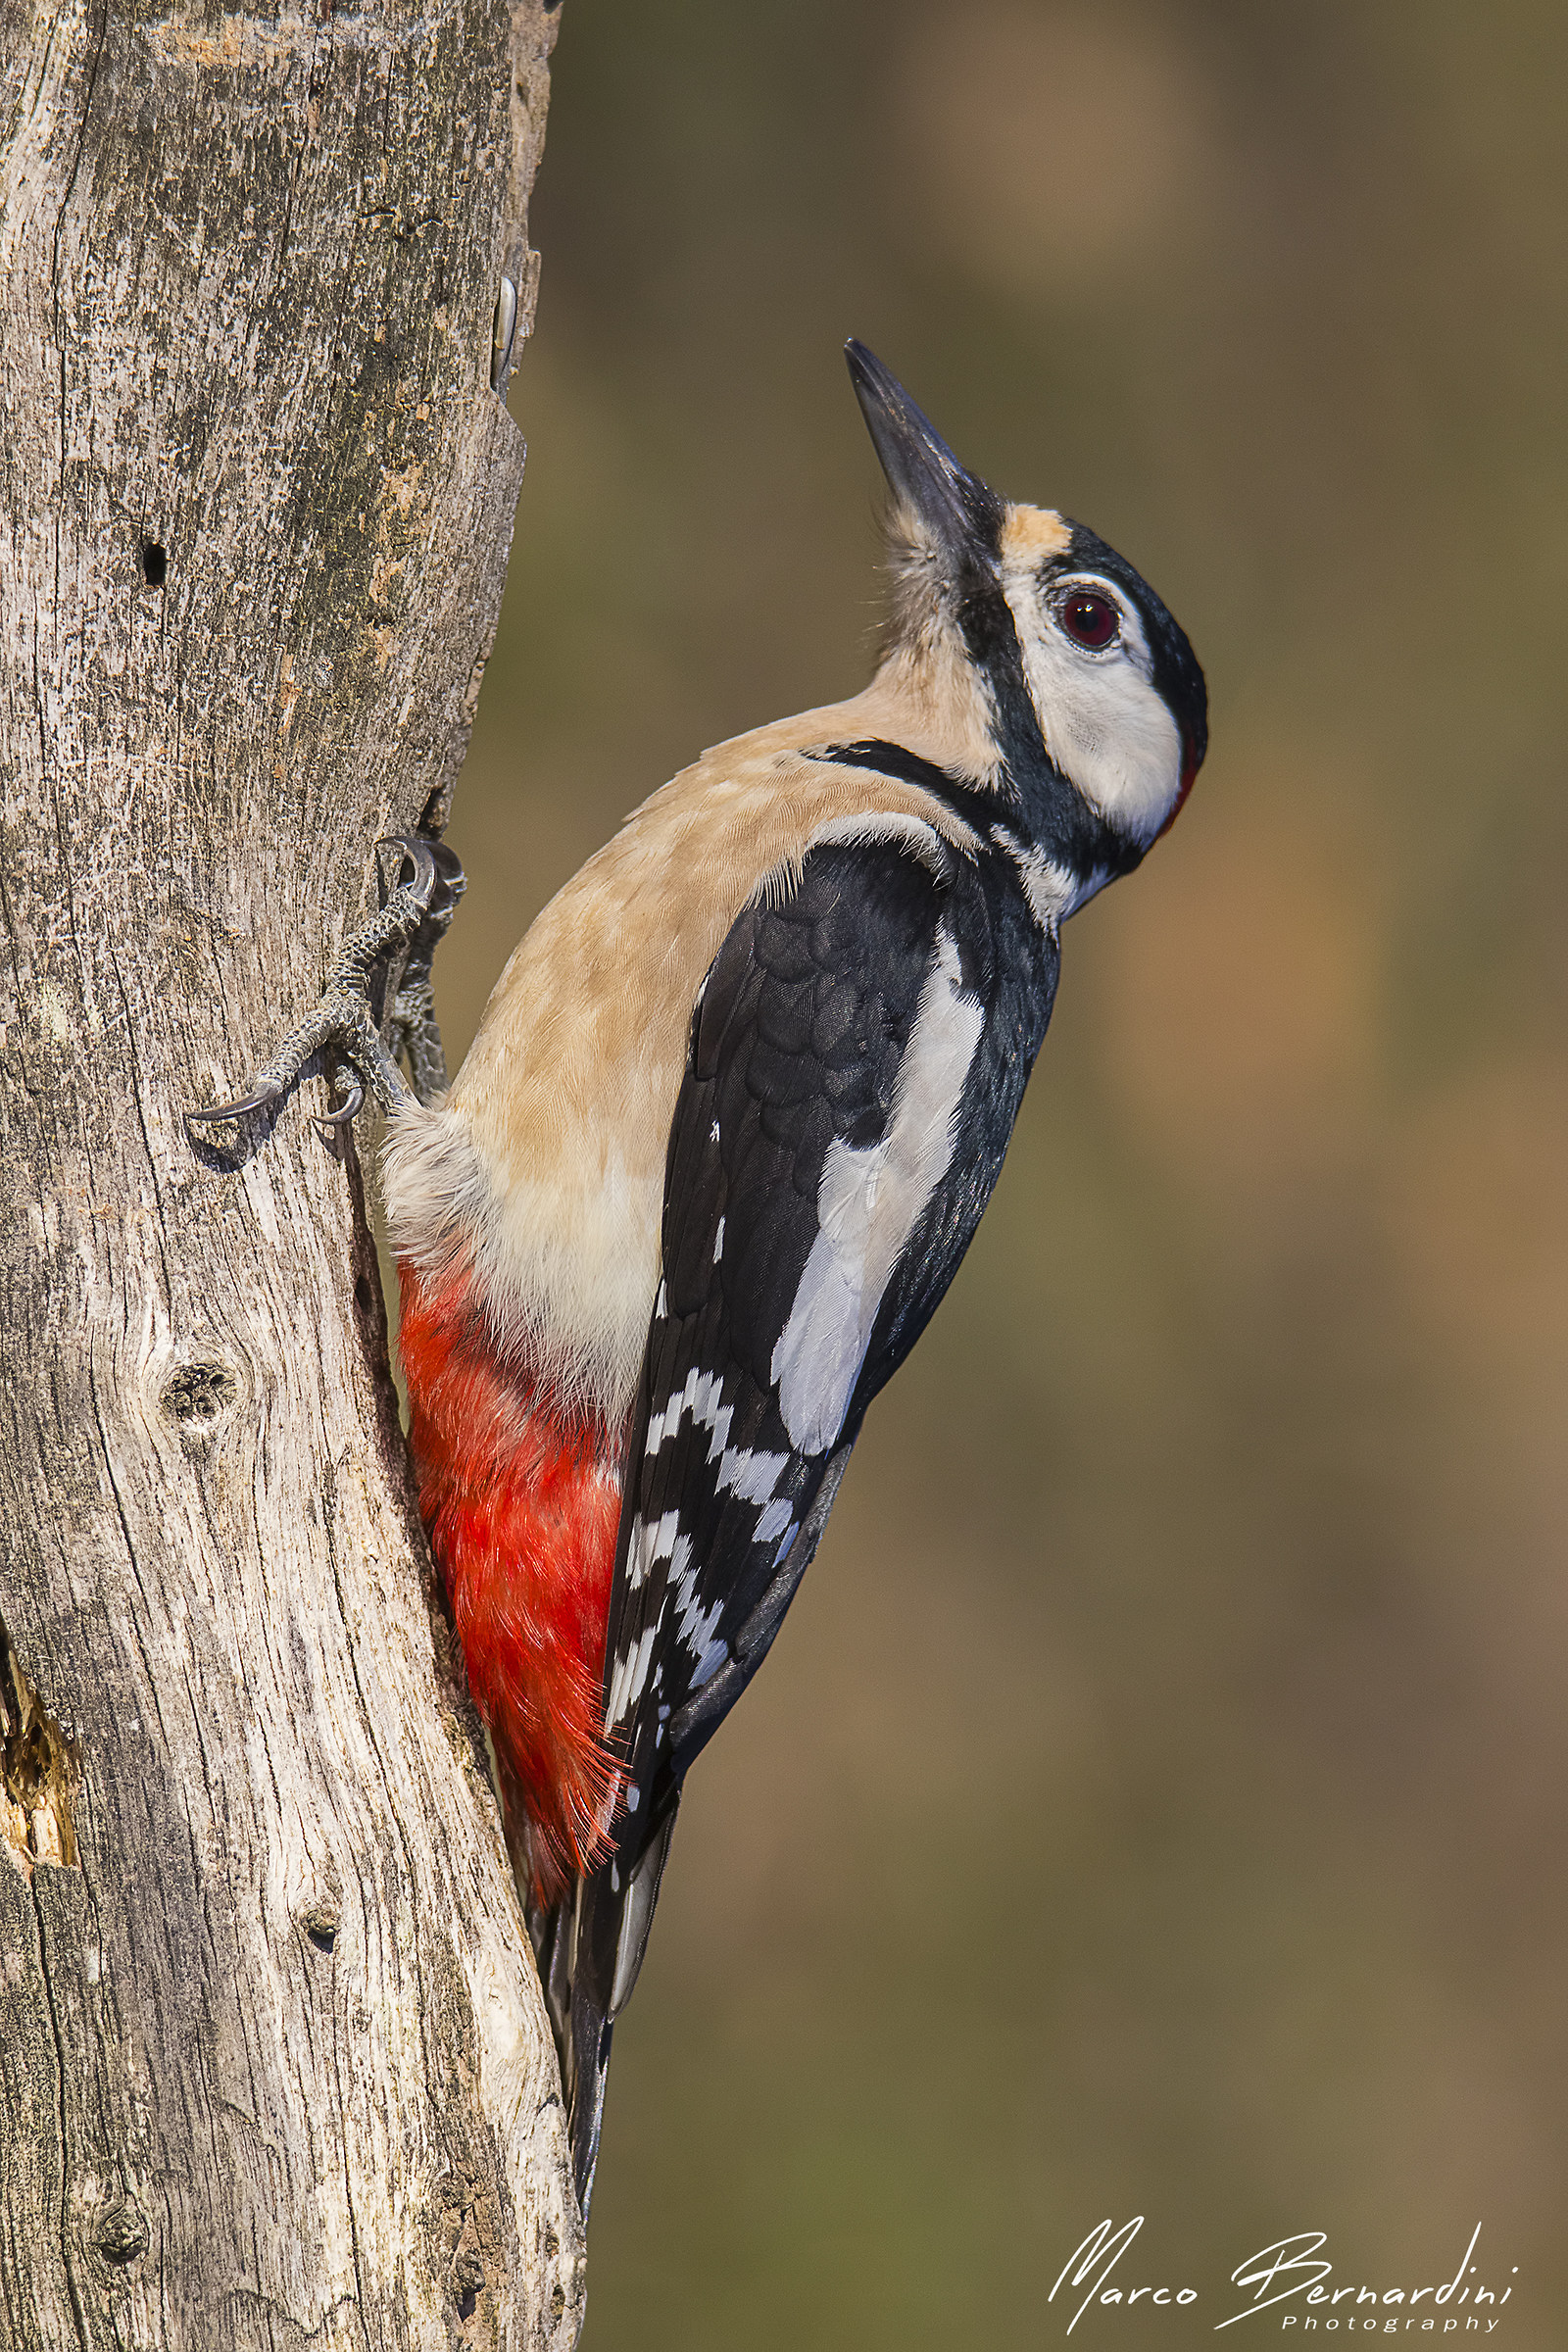 Great Red Woodpecker...